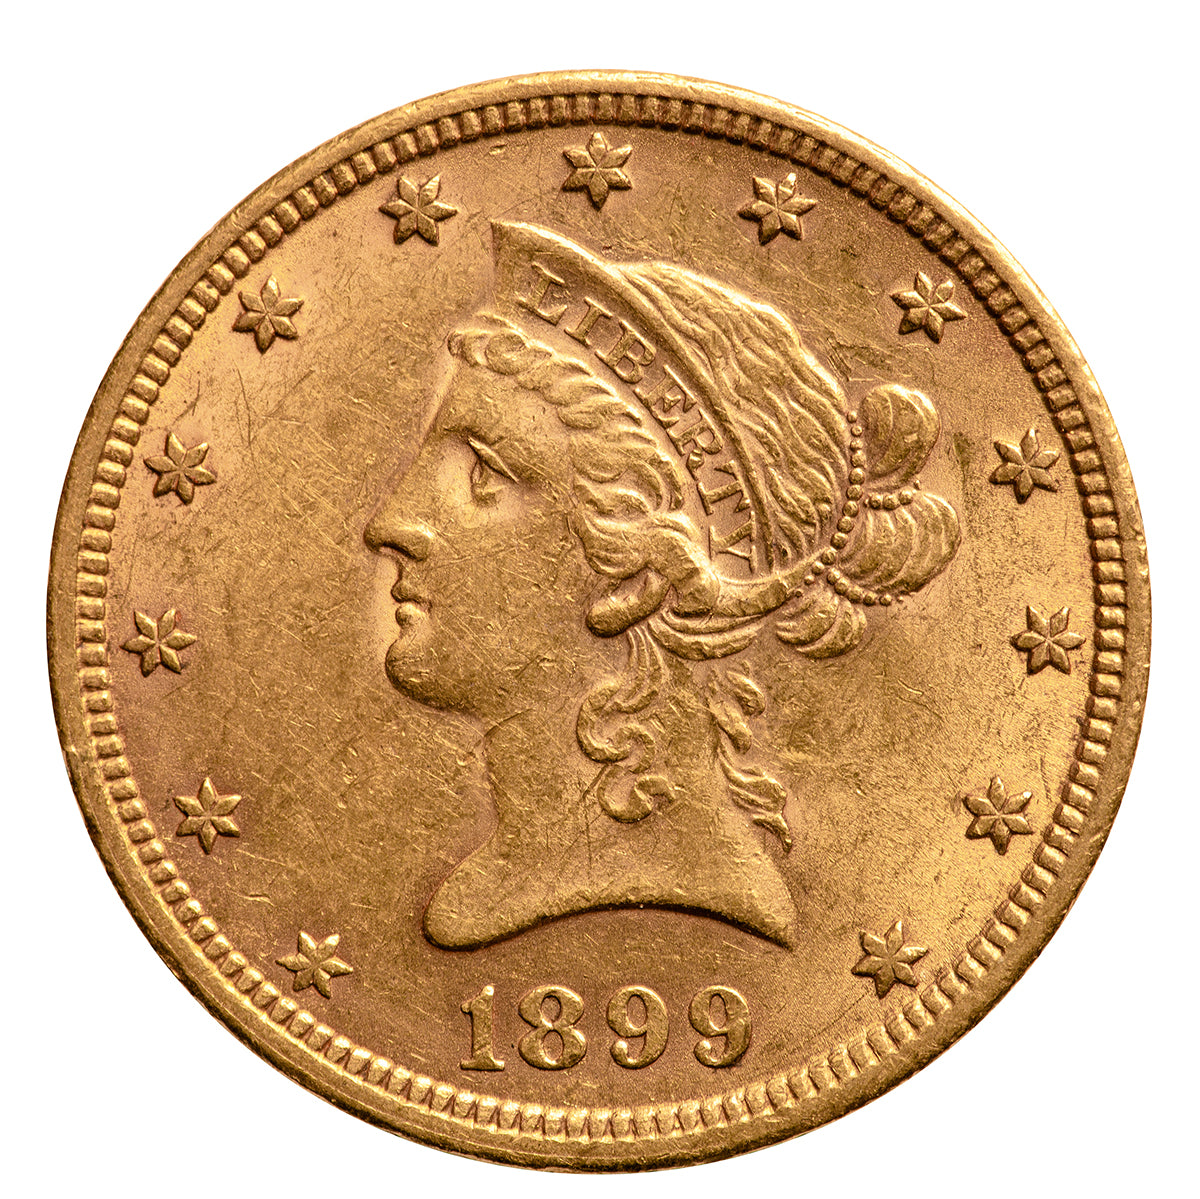 $10 Liberty Gold Eagle (Random Year) (Low Premium)